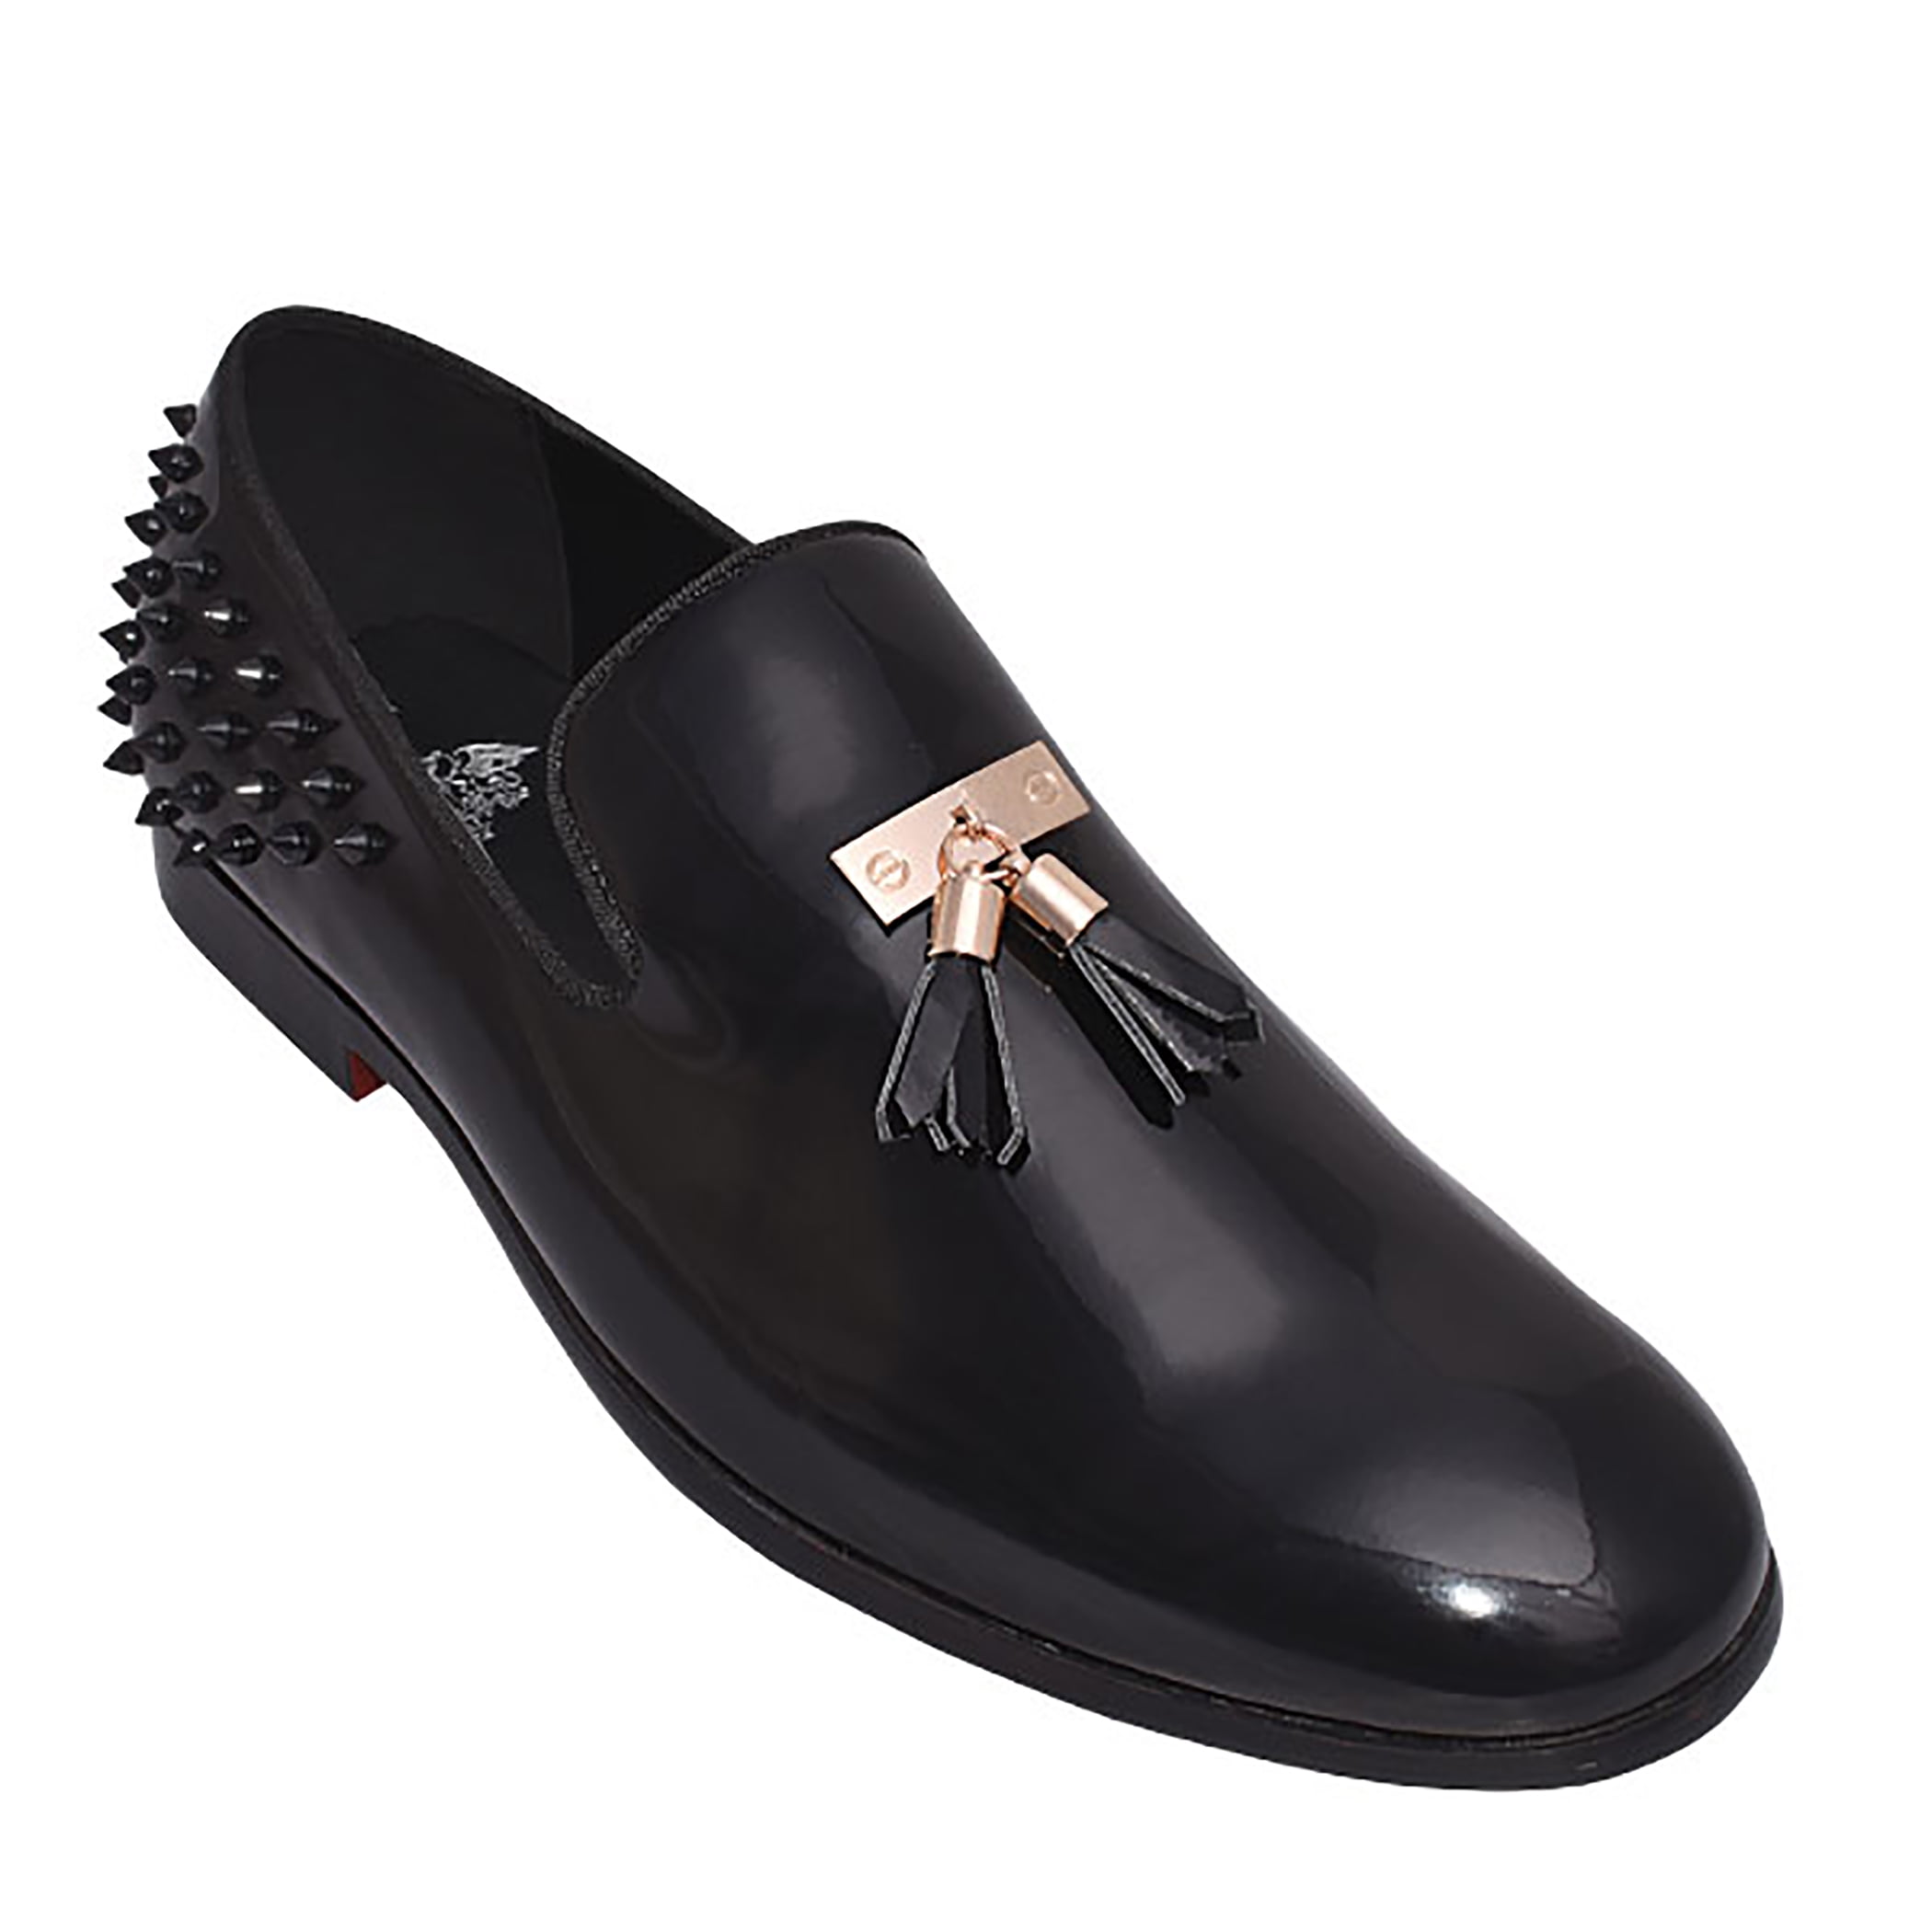 Alexis Bendel Shoes 11 Explore top designs created